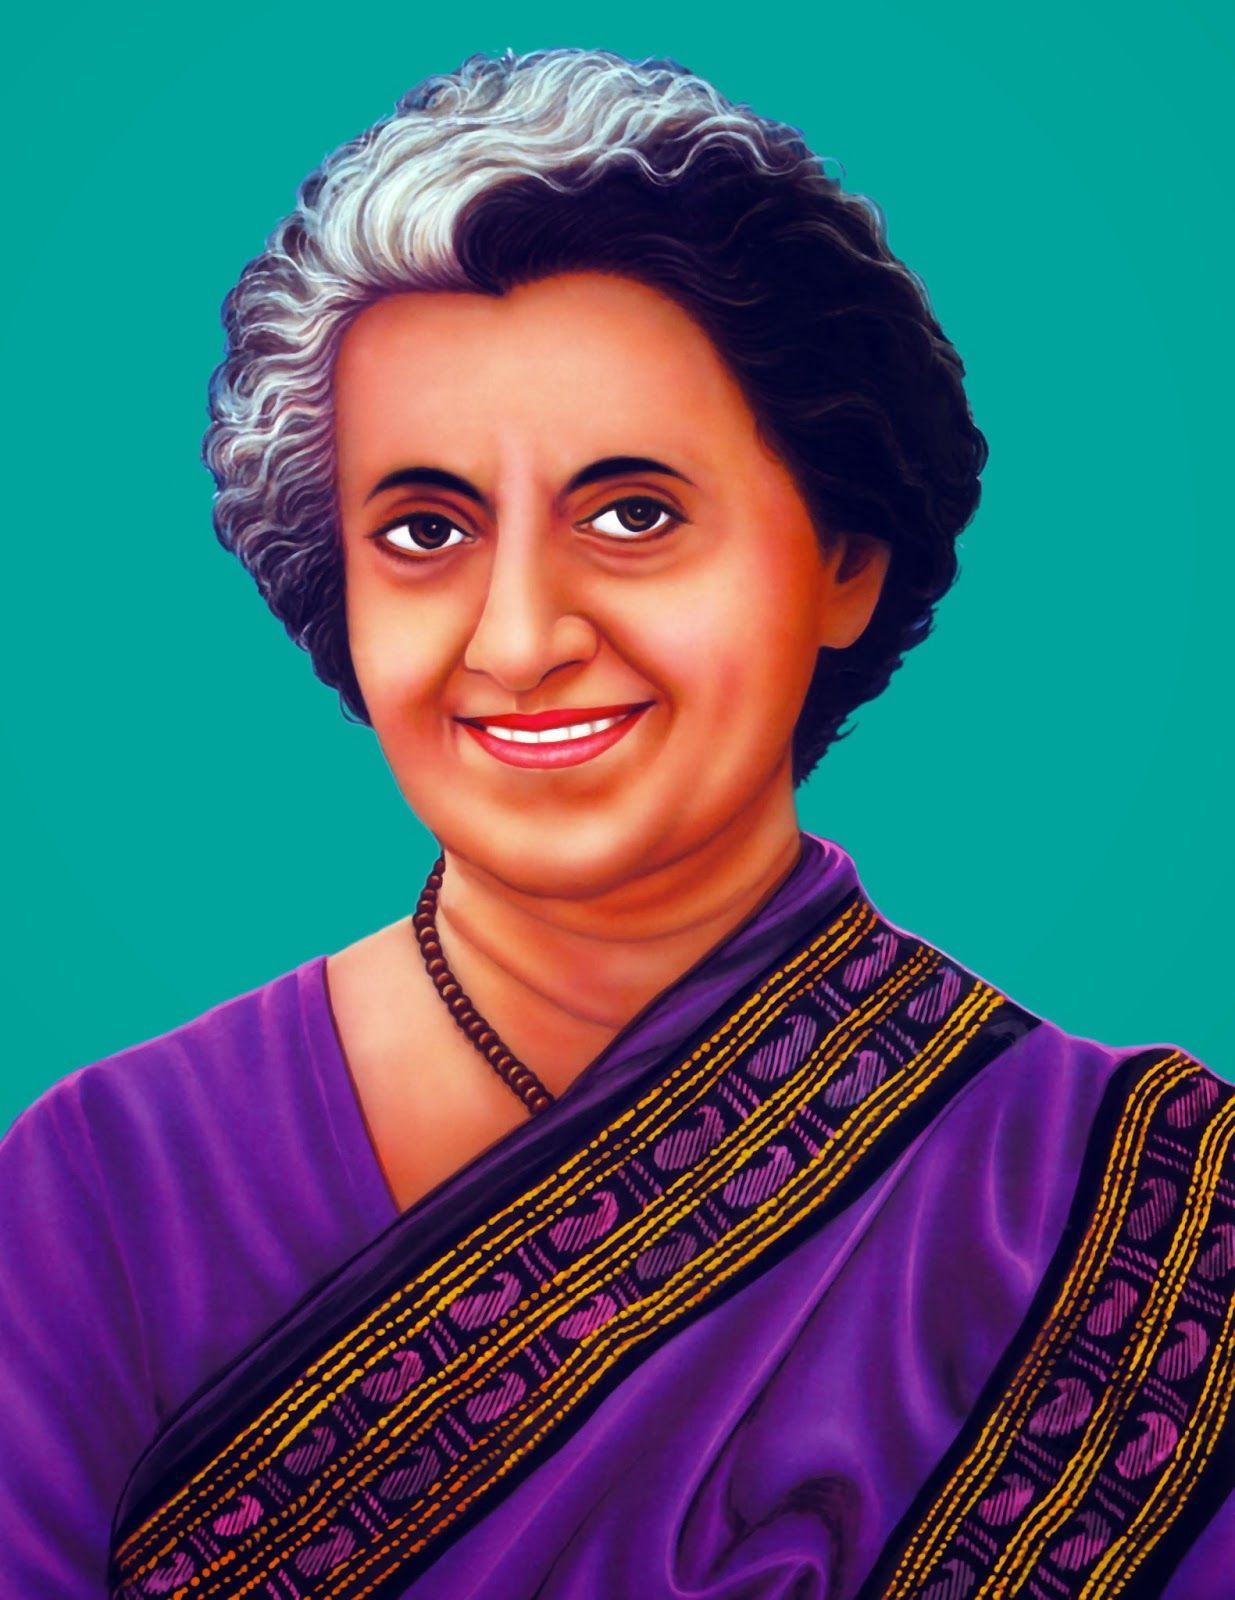 Indira Gandhi Picture - Indira Gandhi Photo - Indira Gandhi Images - Indira  Gandhi Pics - Indira Gandhi Clips